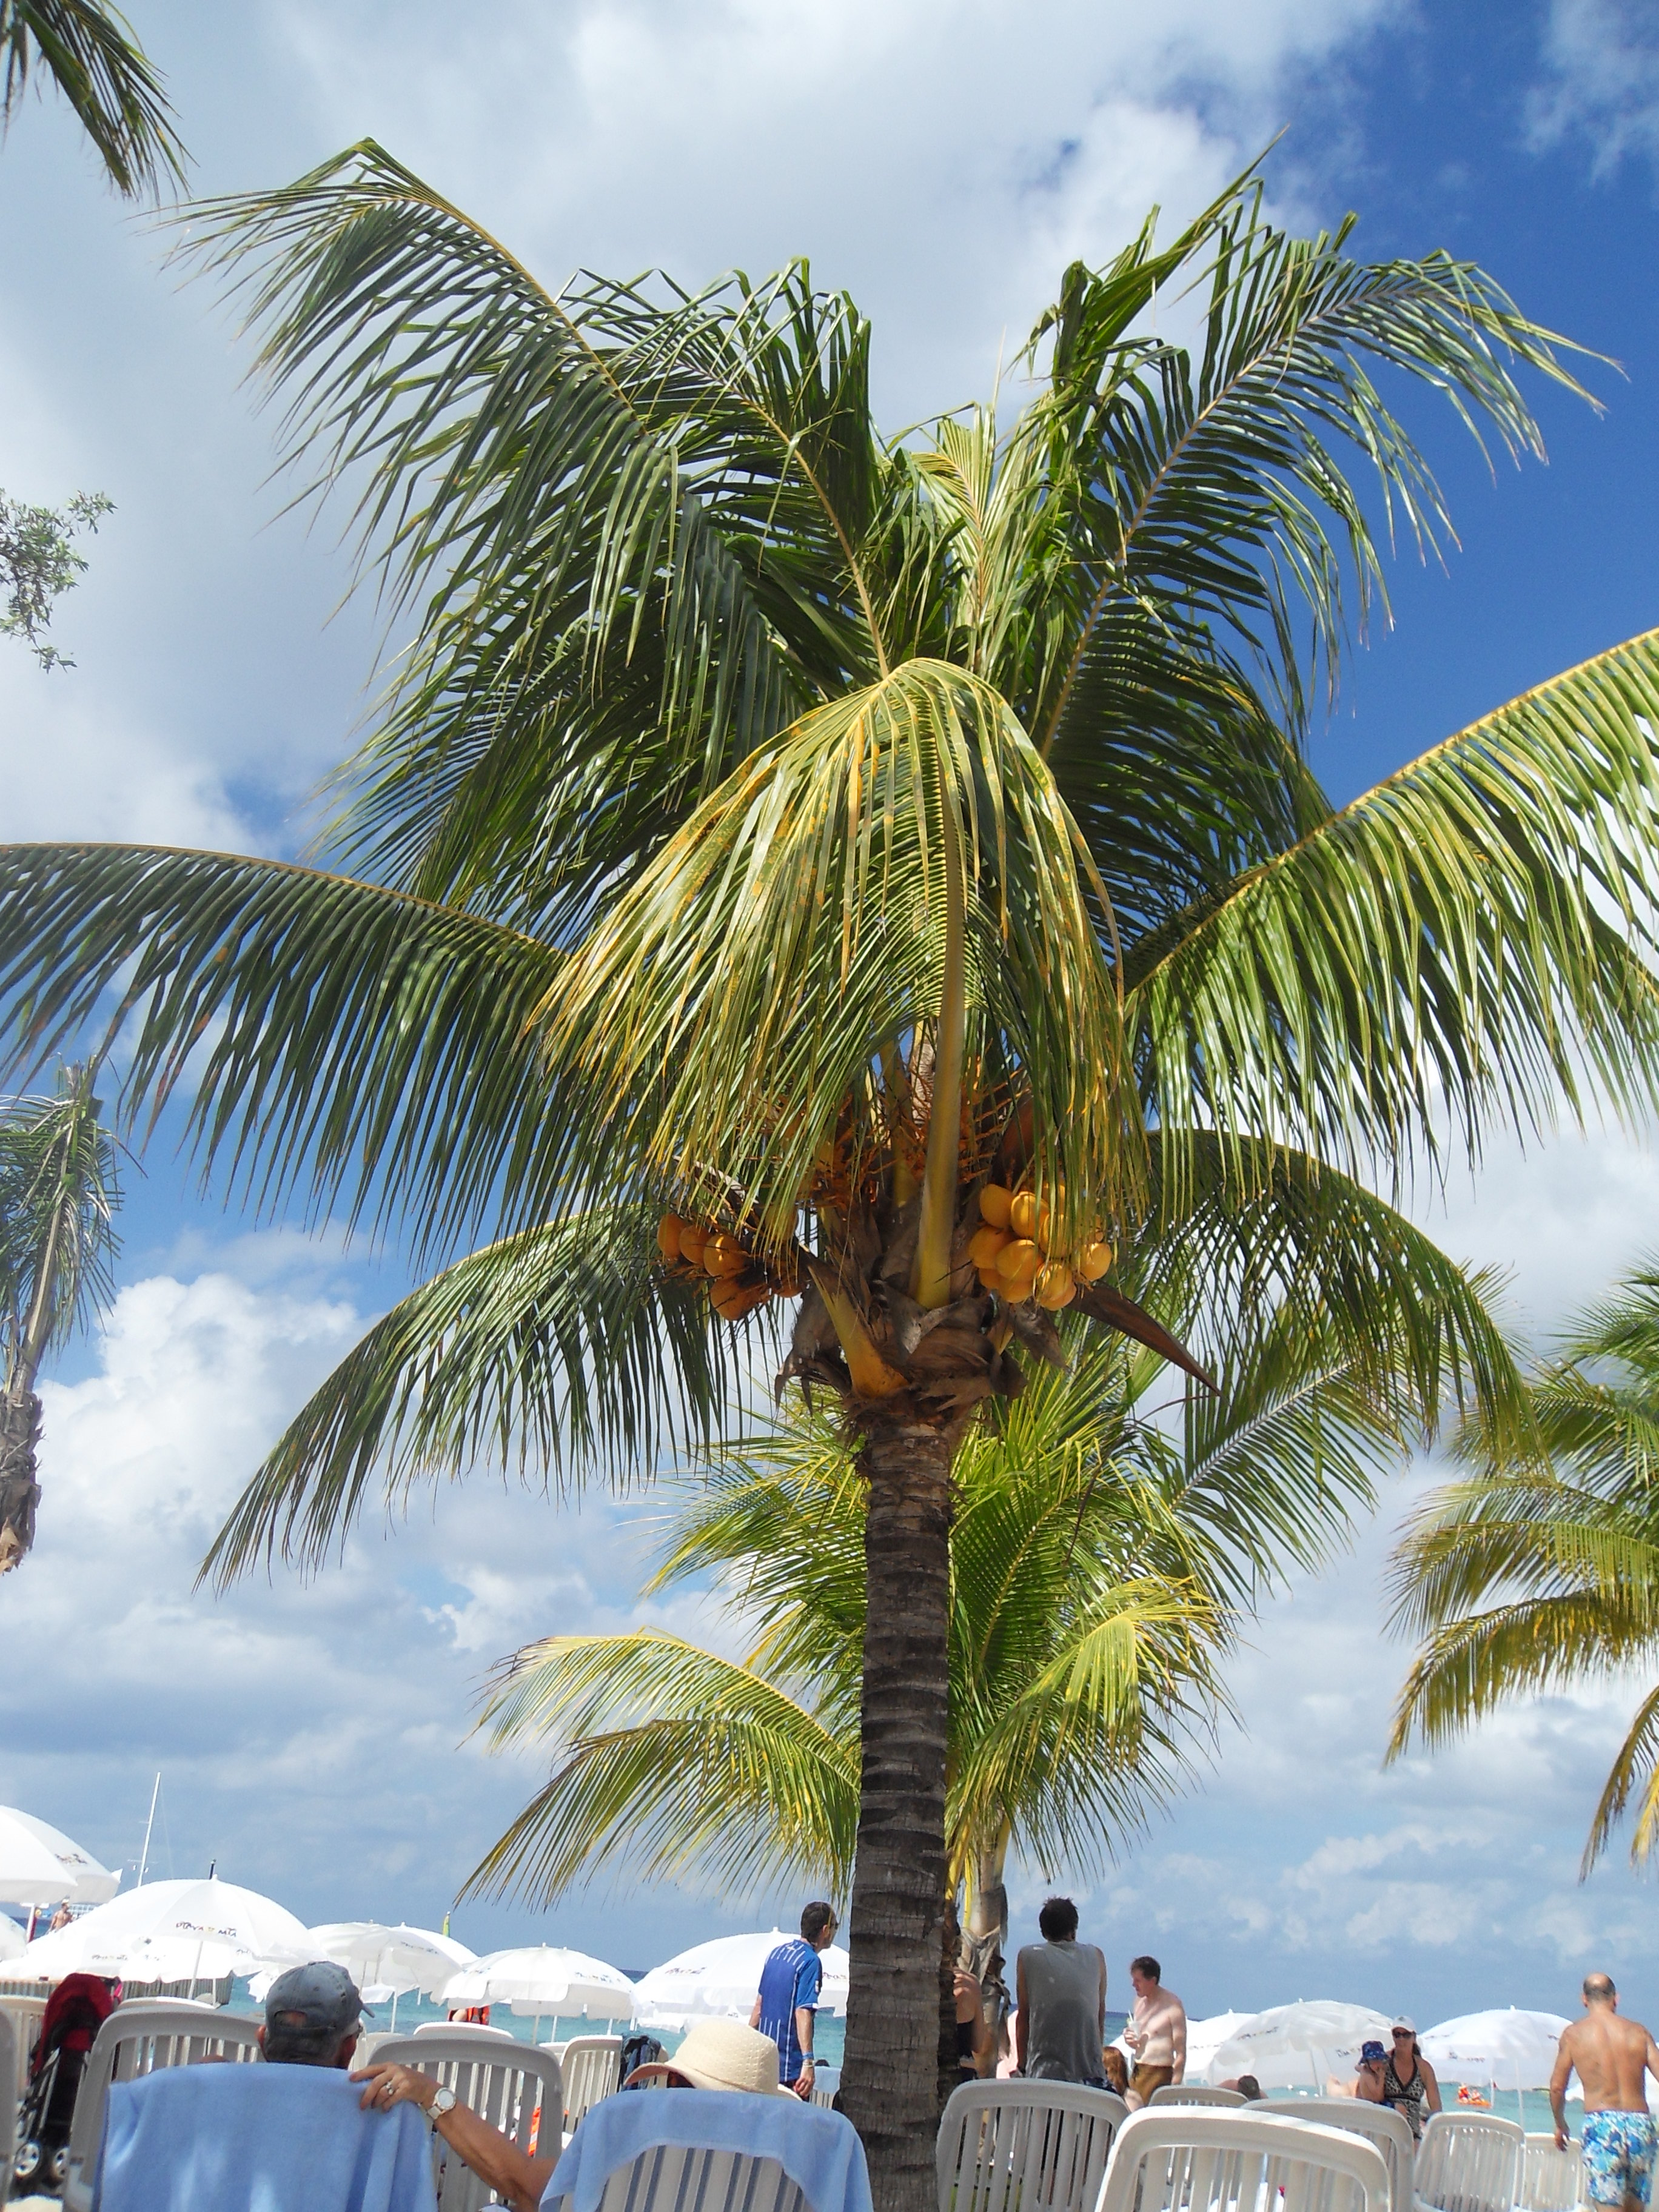 Palm tree on the beach, Cozumel, Mexico